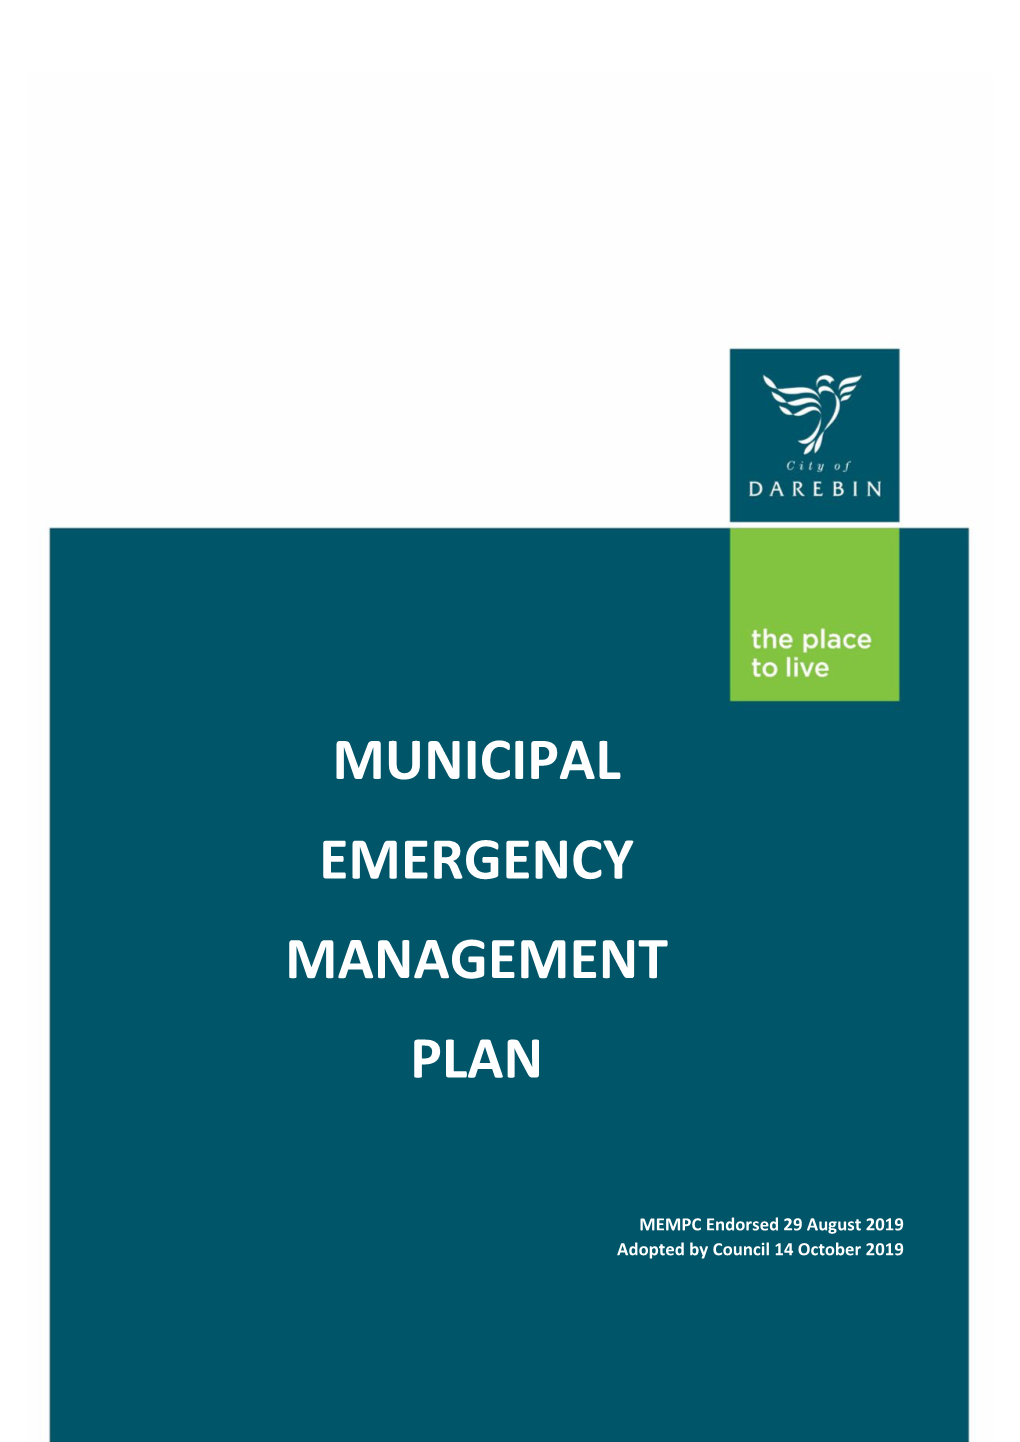 Municipal Emergency Management Plan